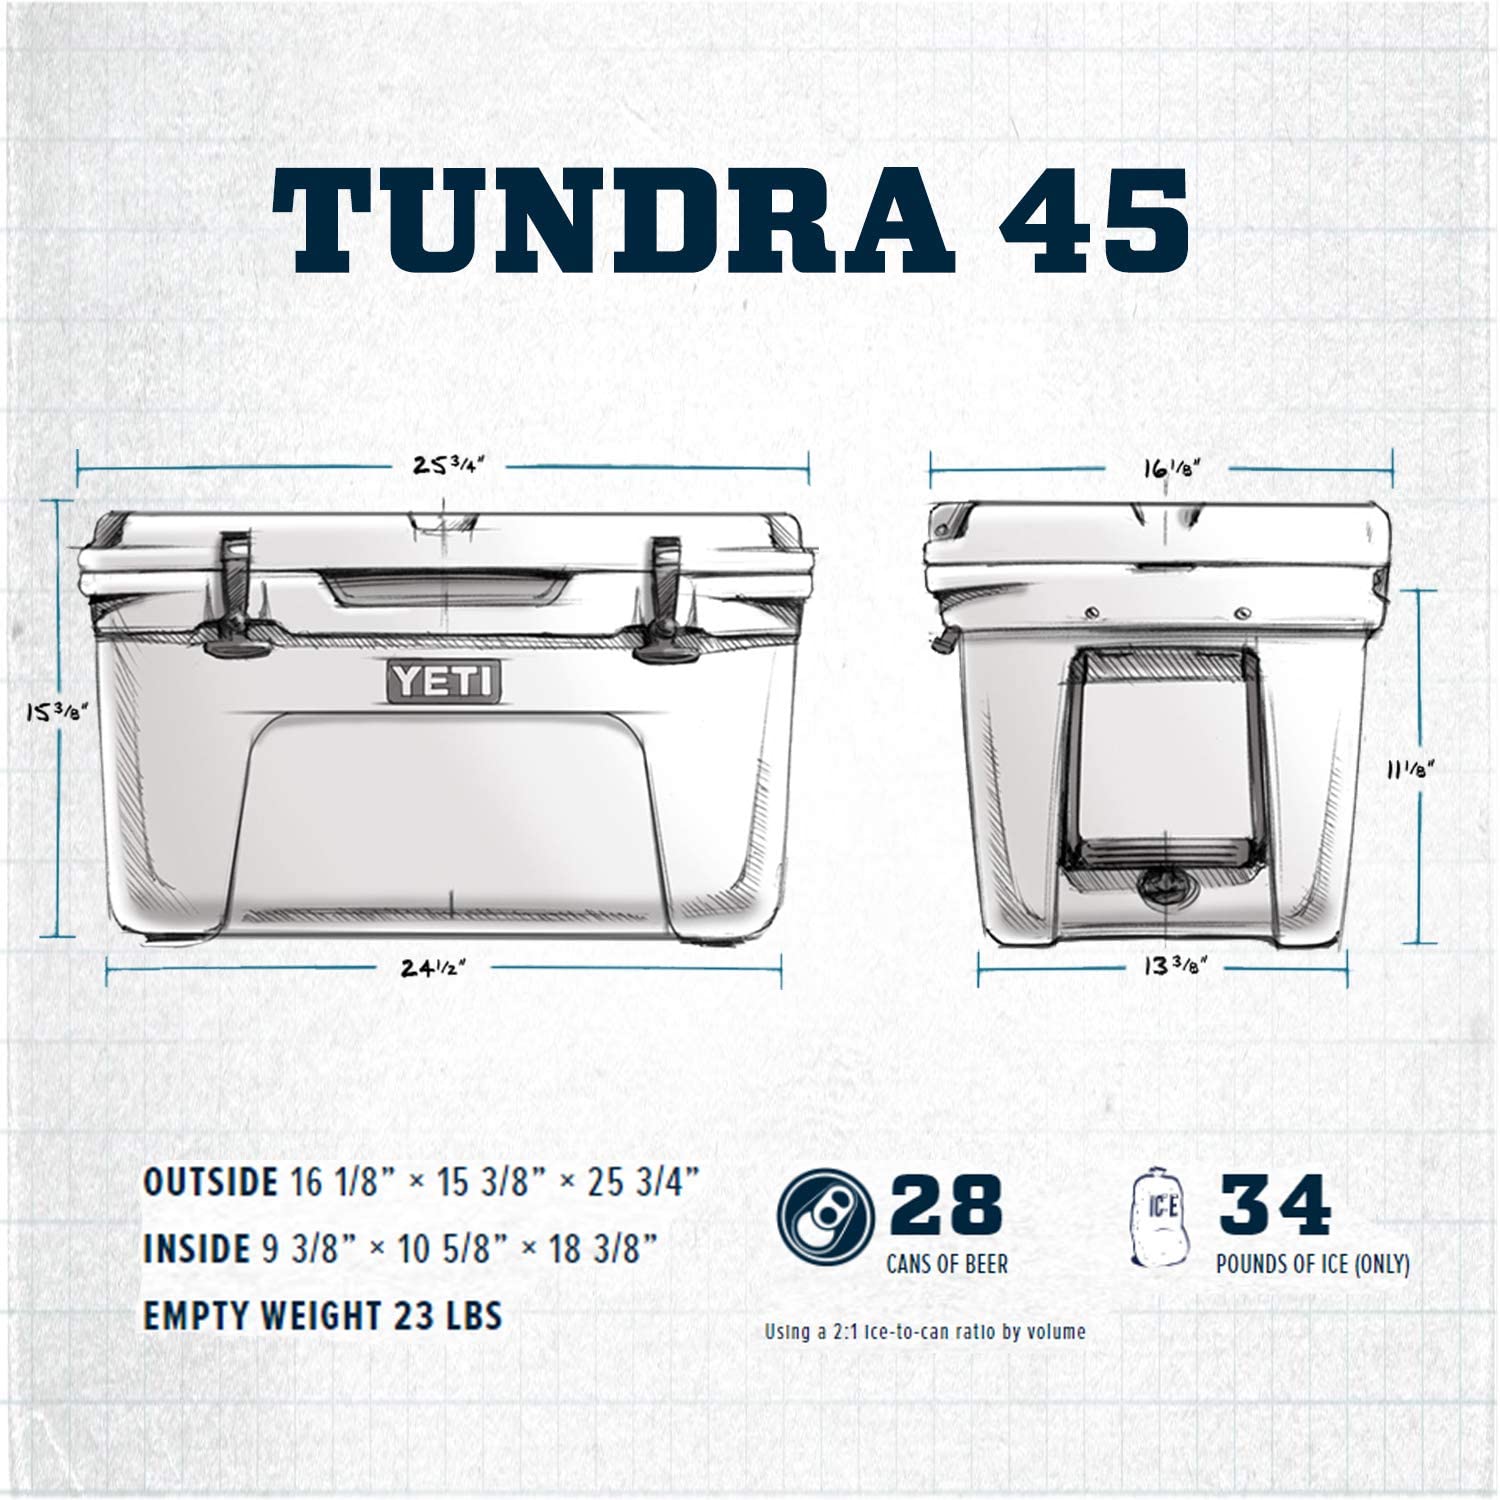 YETI Tundra 45 Cooler Specs